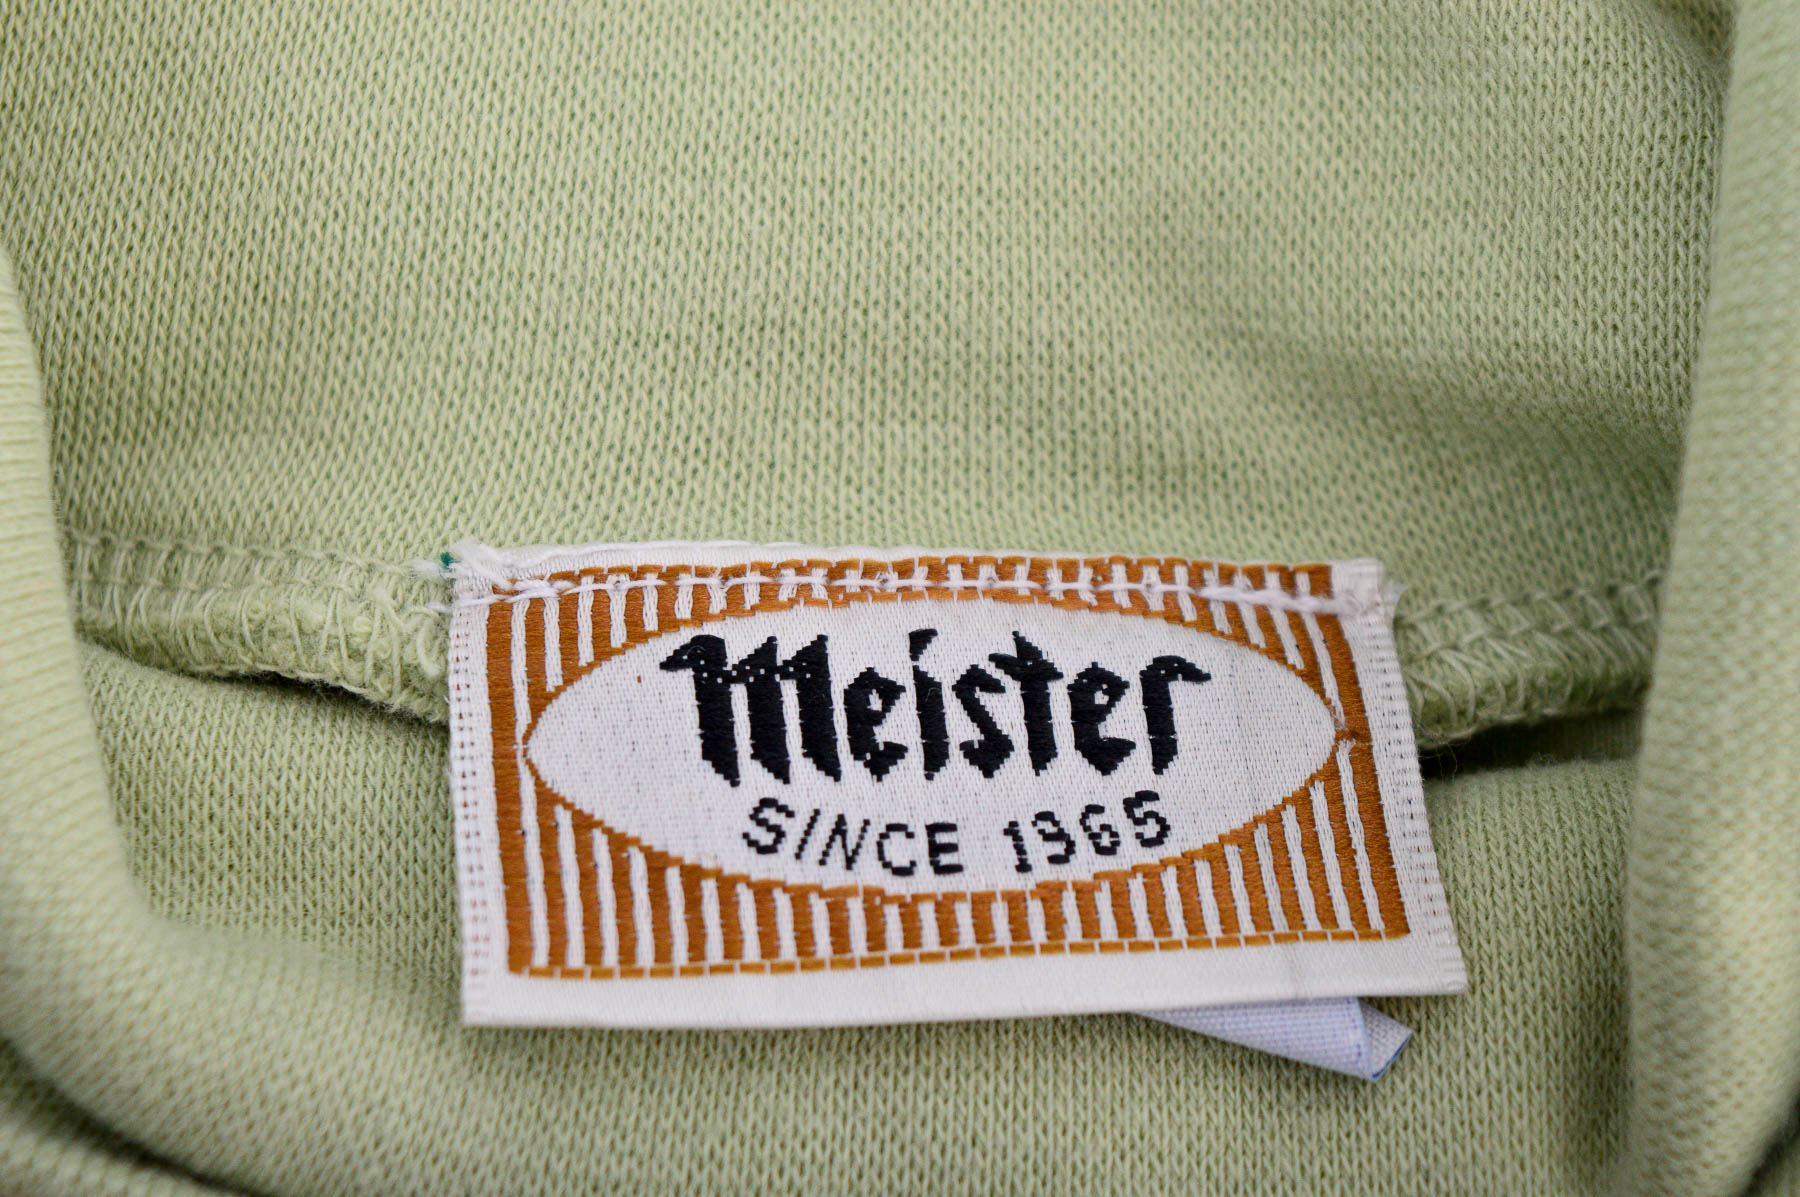 Дамска блуза - Mister Since 1965 - 2